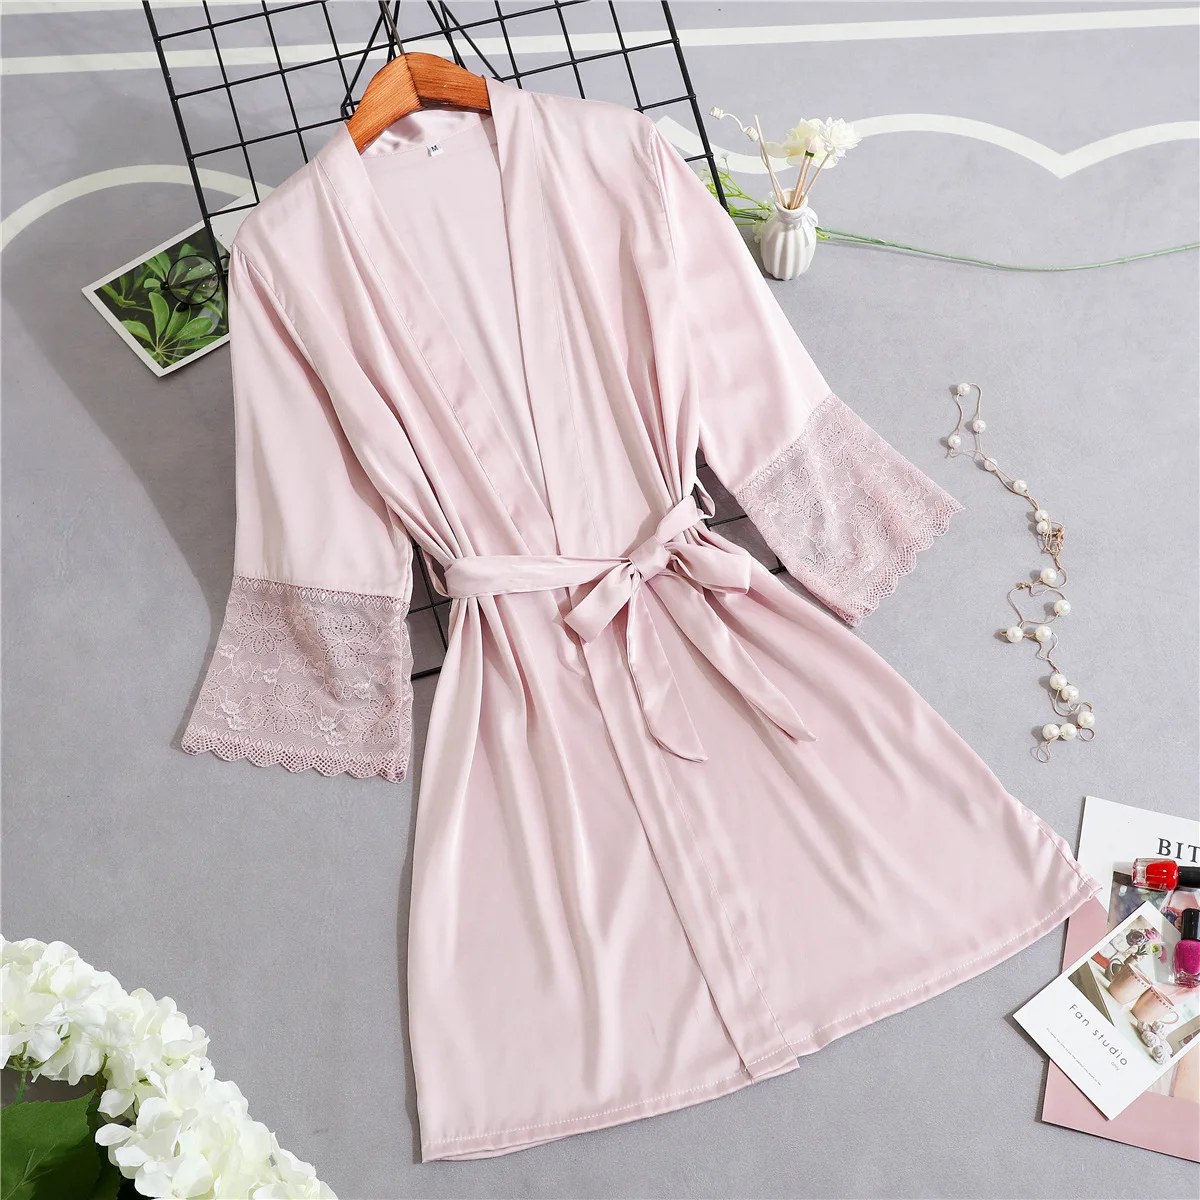 Kimono Gown Soft Sleepwear Women Negligee Lace Half Sleeve Robe Casual Loose Bride Bridesmaid Wedding Home Clothing Nightgown